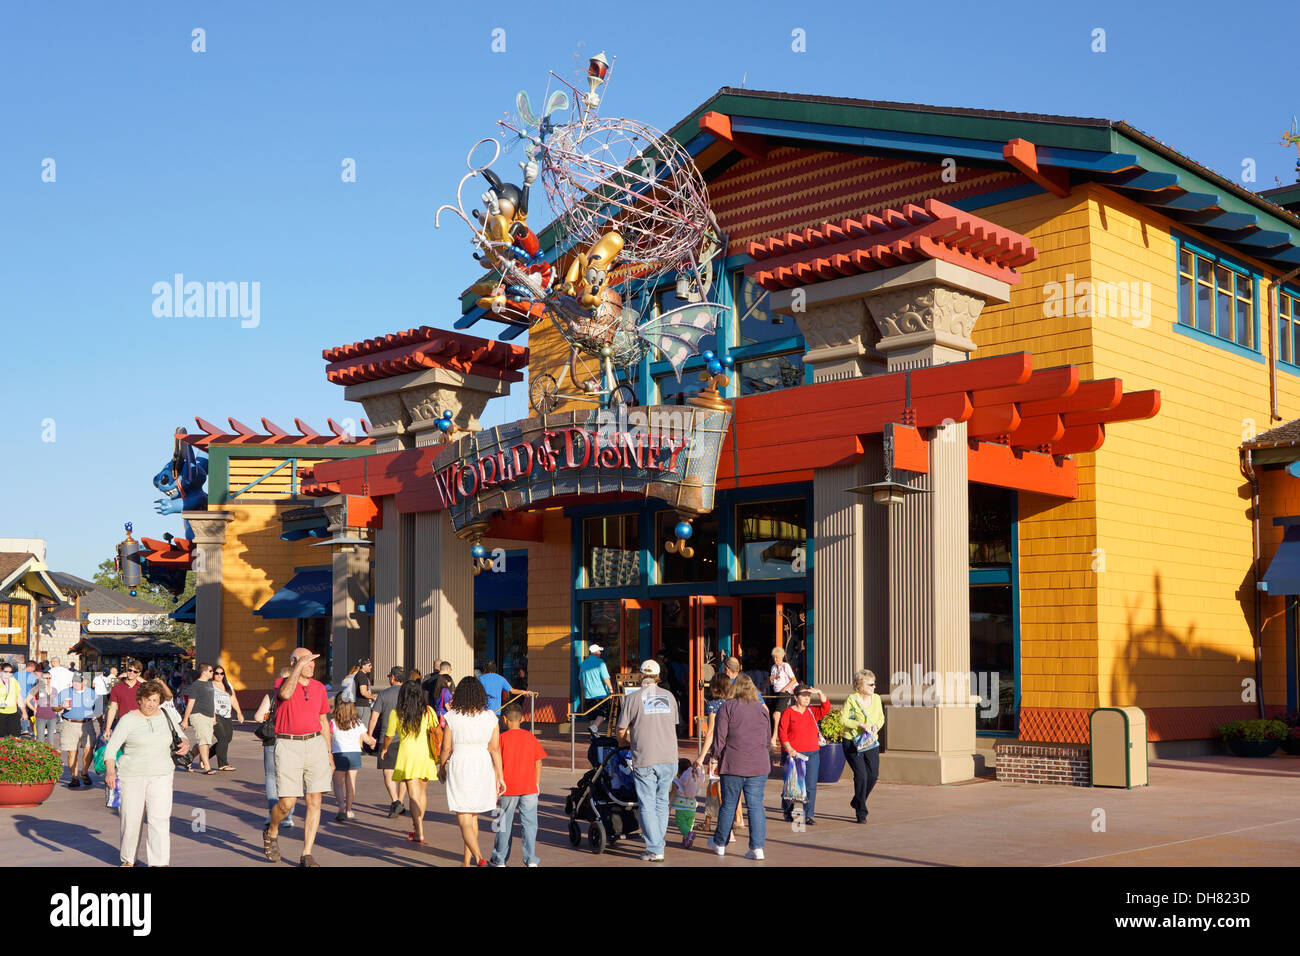 World of Disney Store, Downtown Disney, Disney World Resort, Orlando Florida Stock Photo